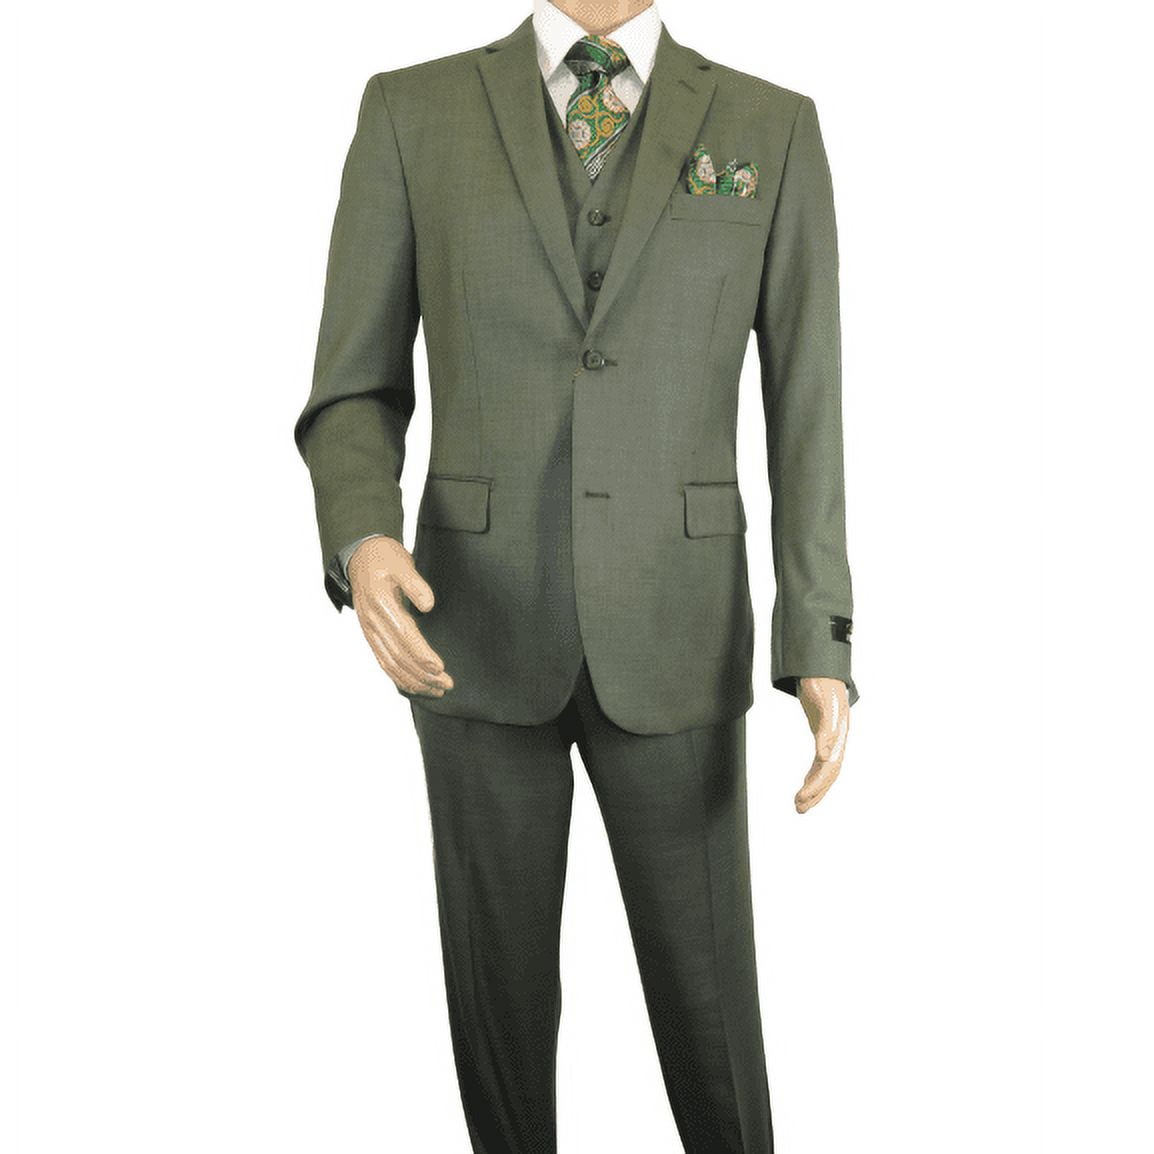 Sophisticated Olive Green Suit for Men